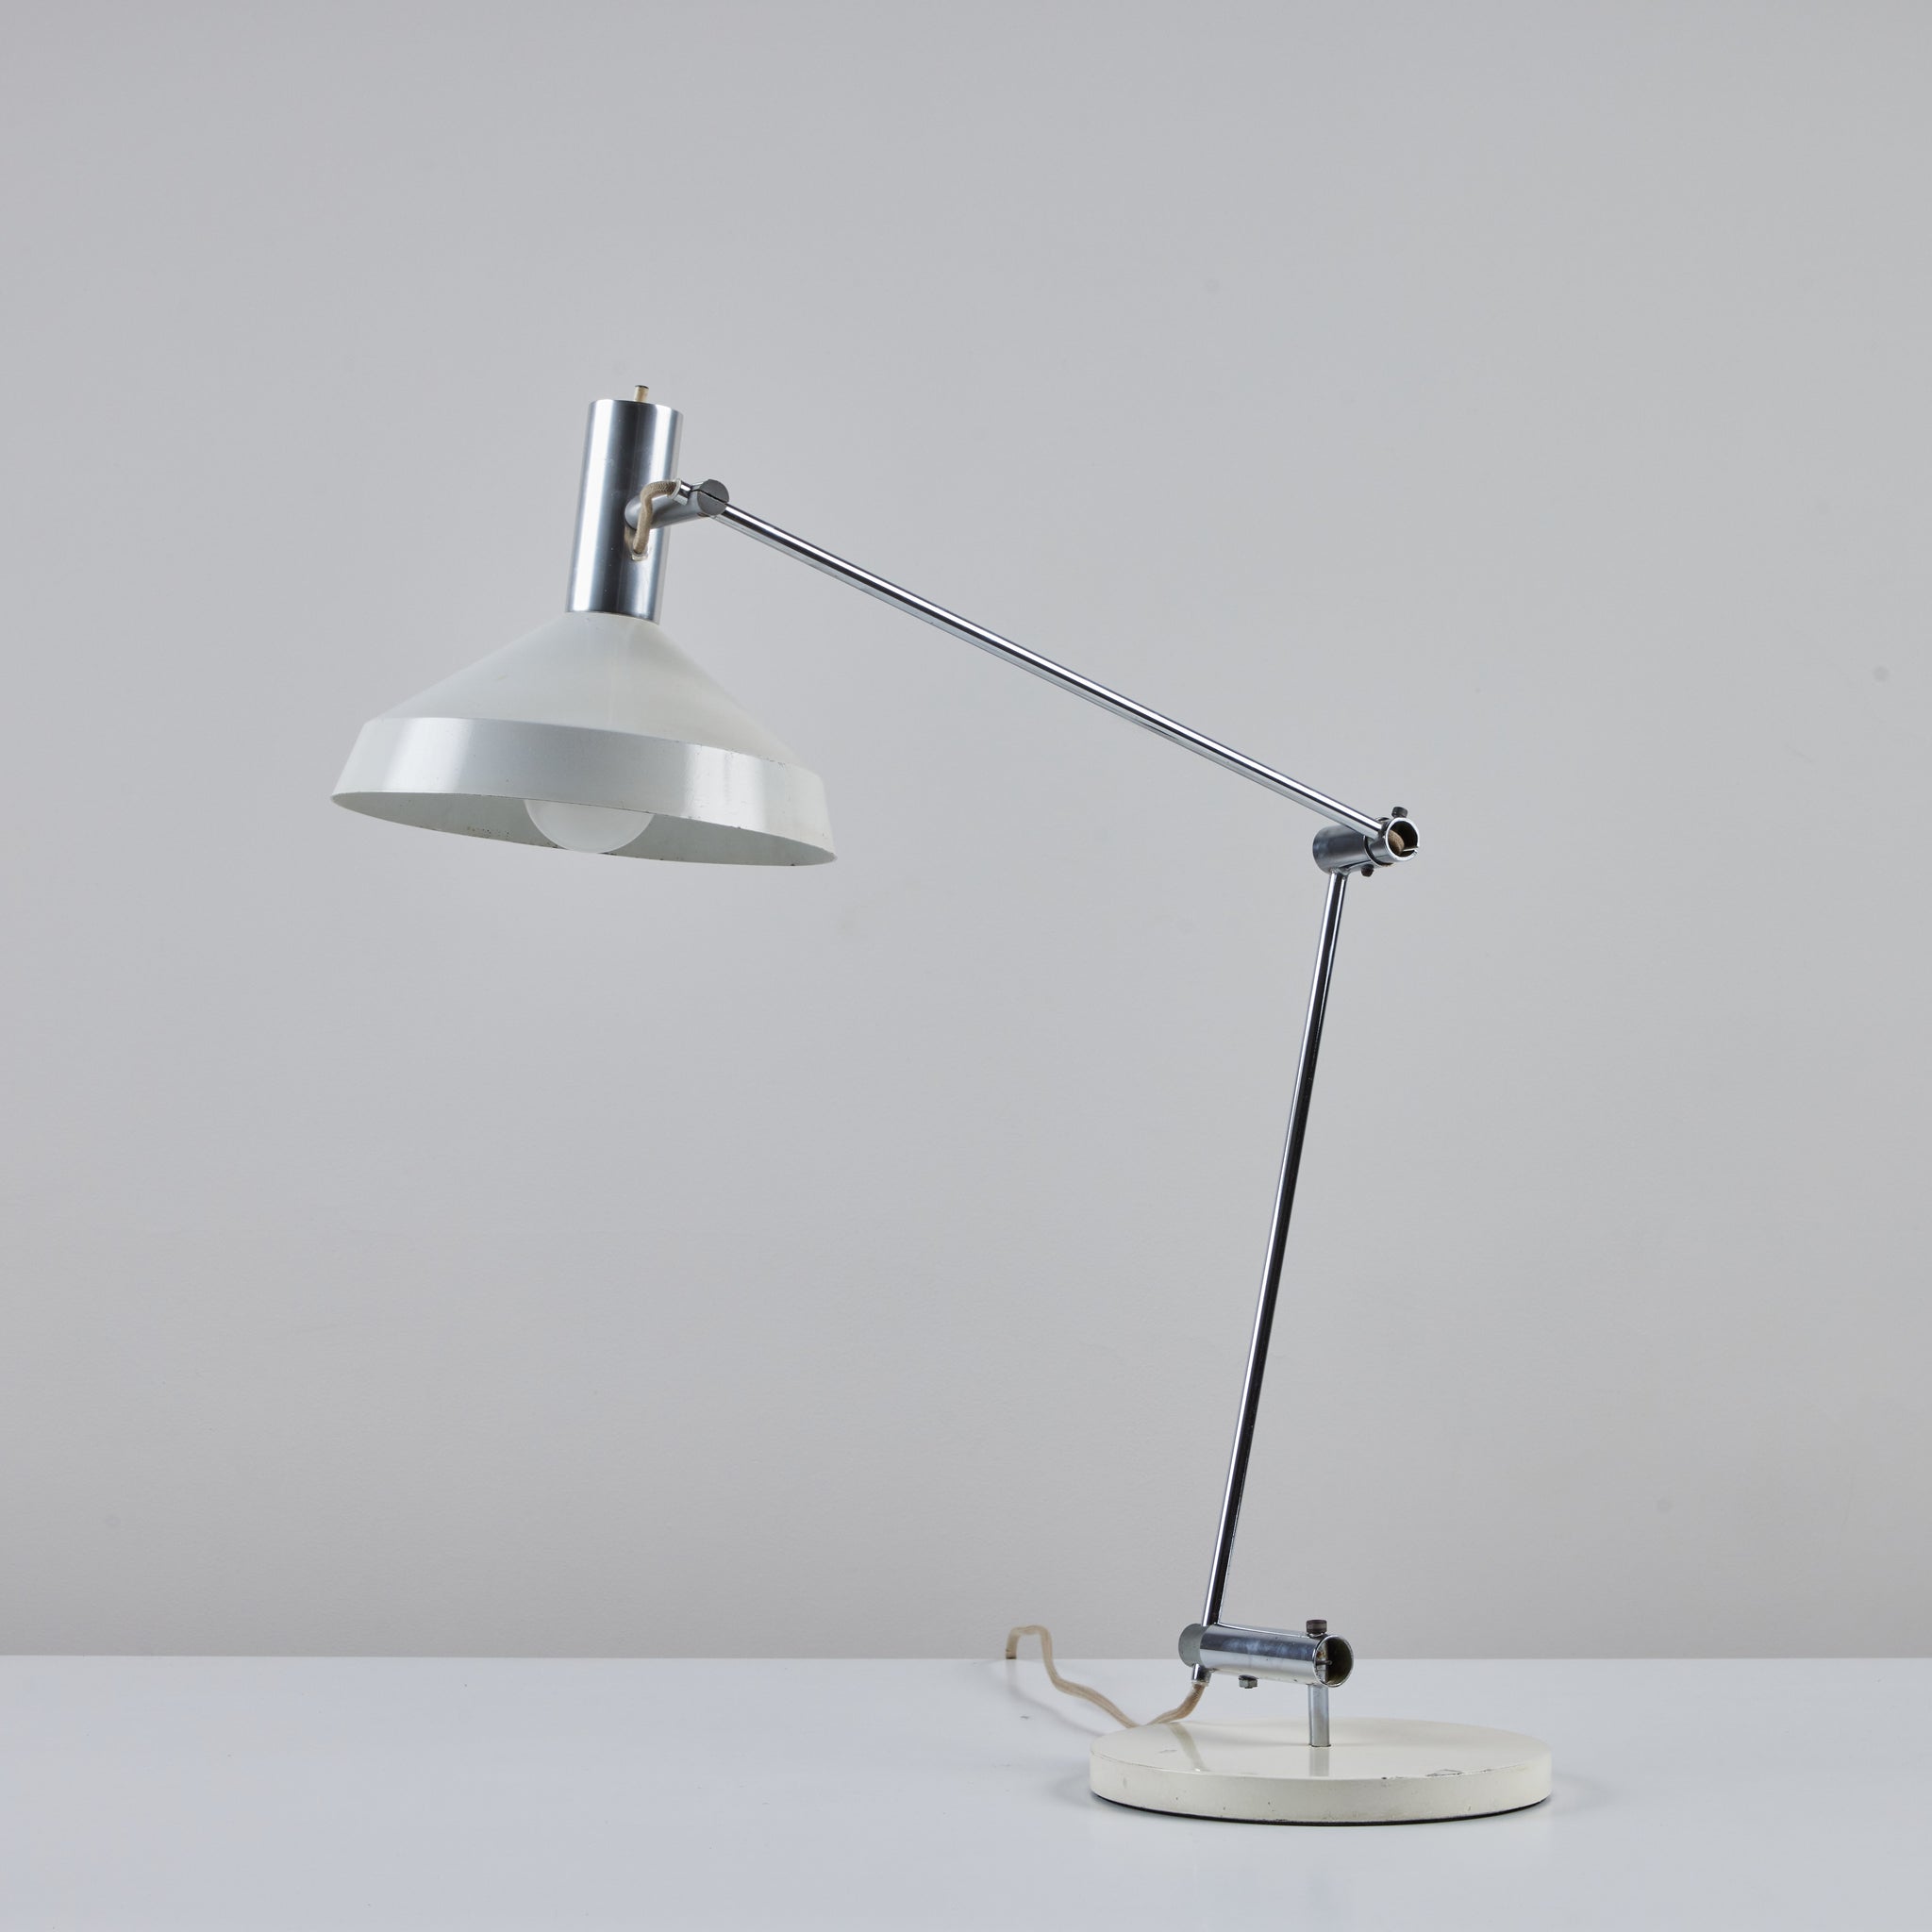 Rosemarie & Rico Baltensweiler Articulating Table Lamp